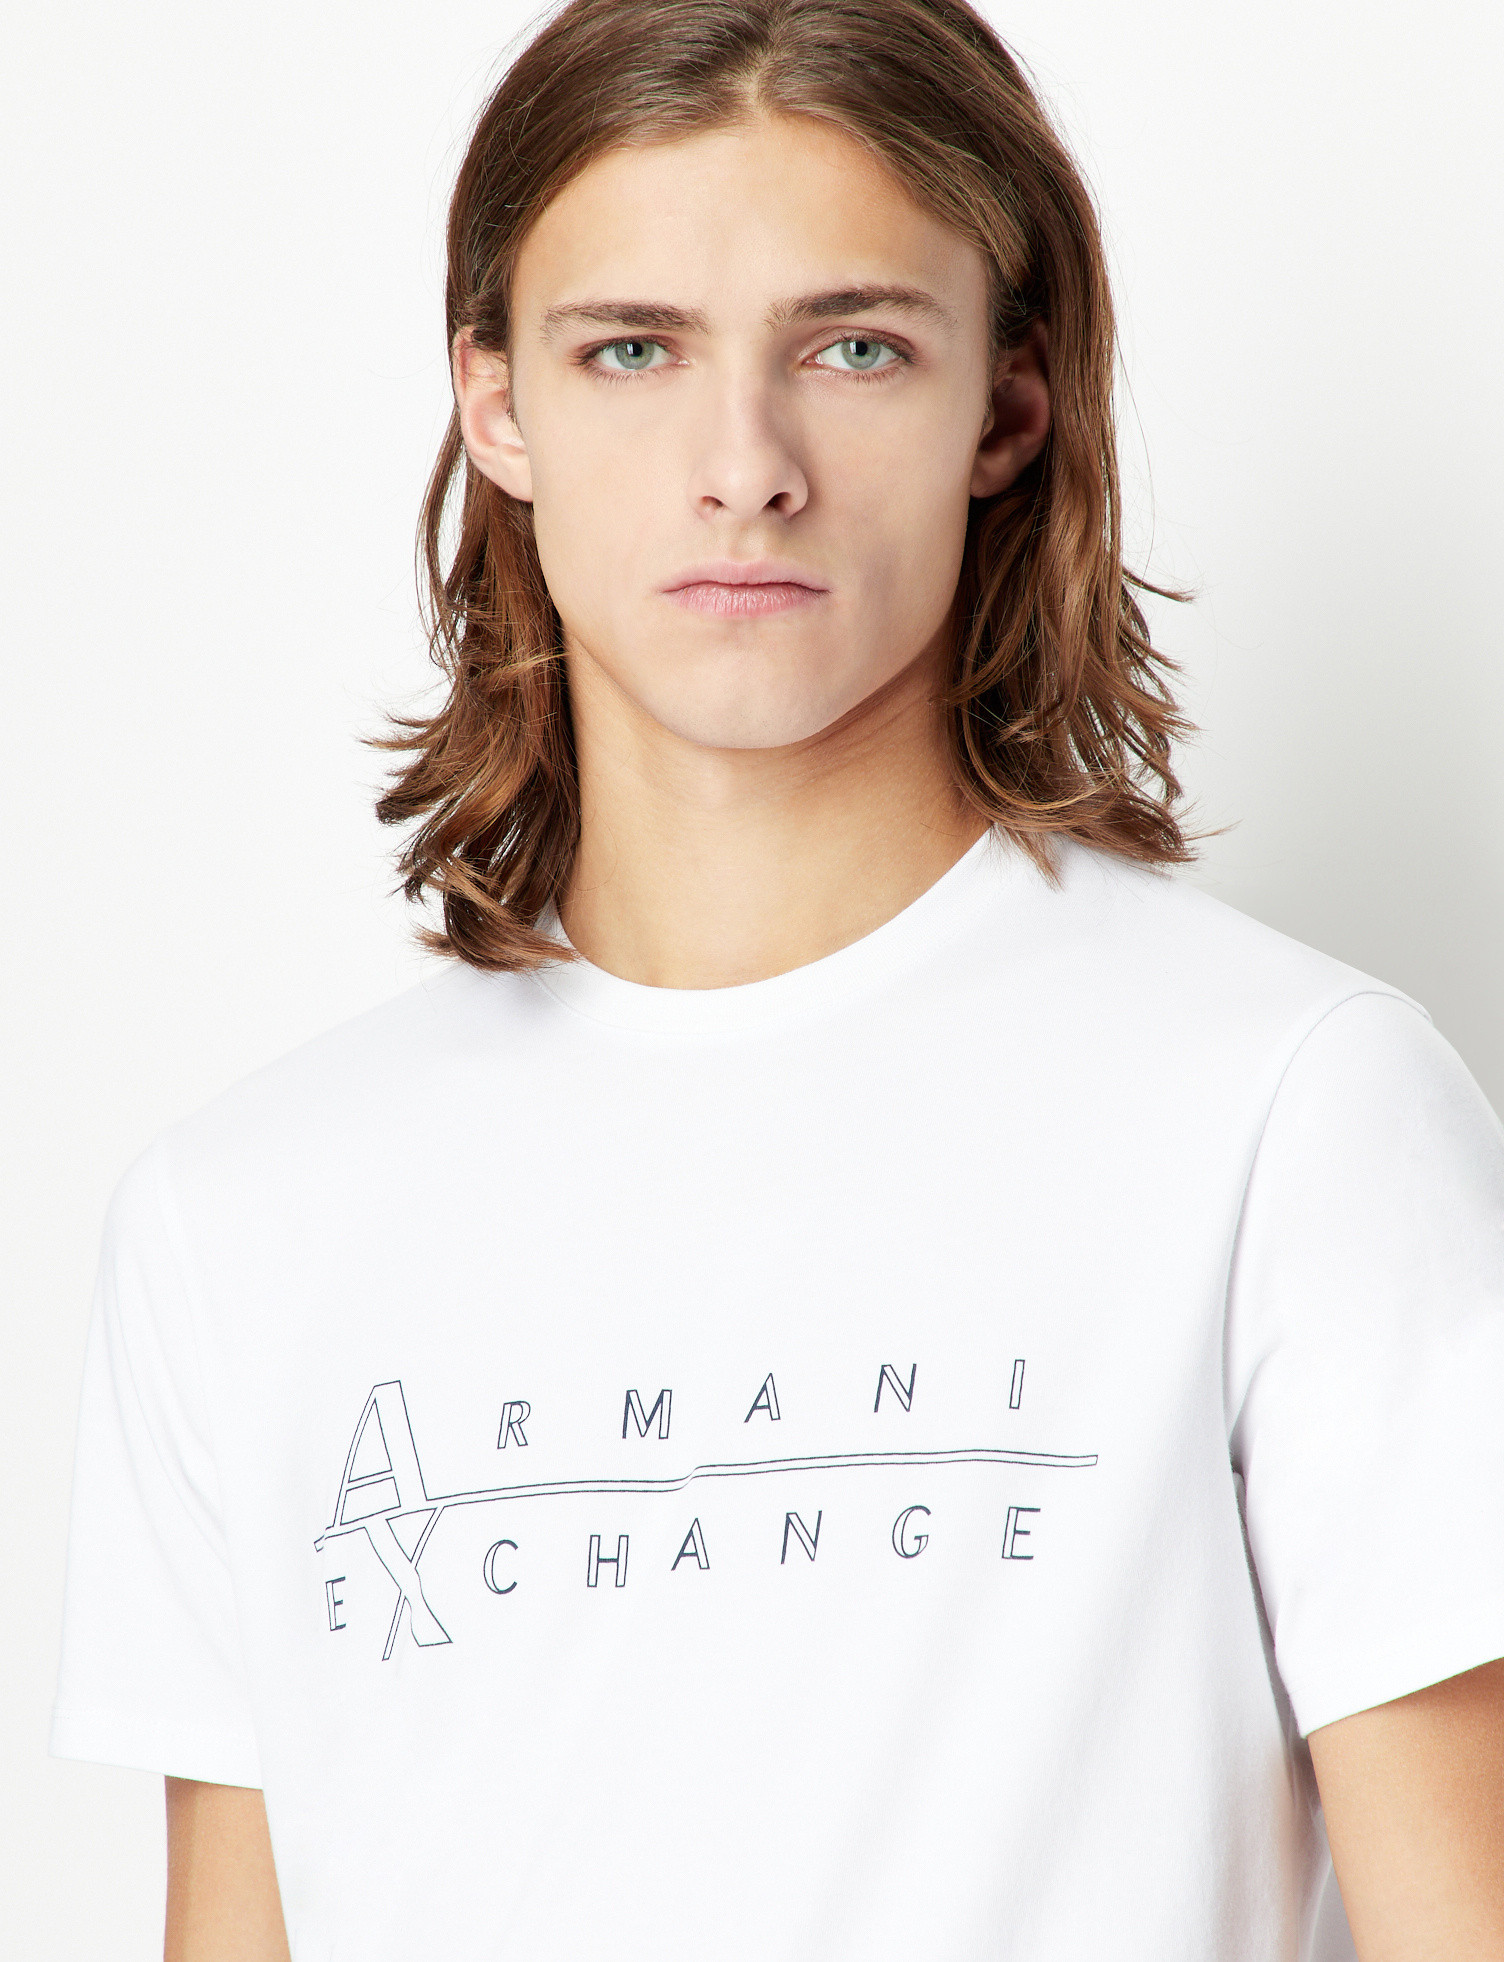 Armani Exchange - T-shirt con stampa slim fit, Bianco, large